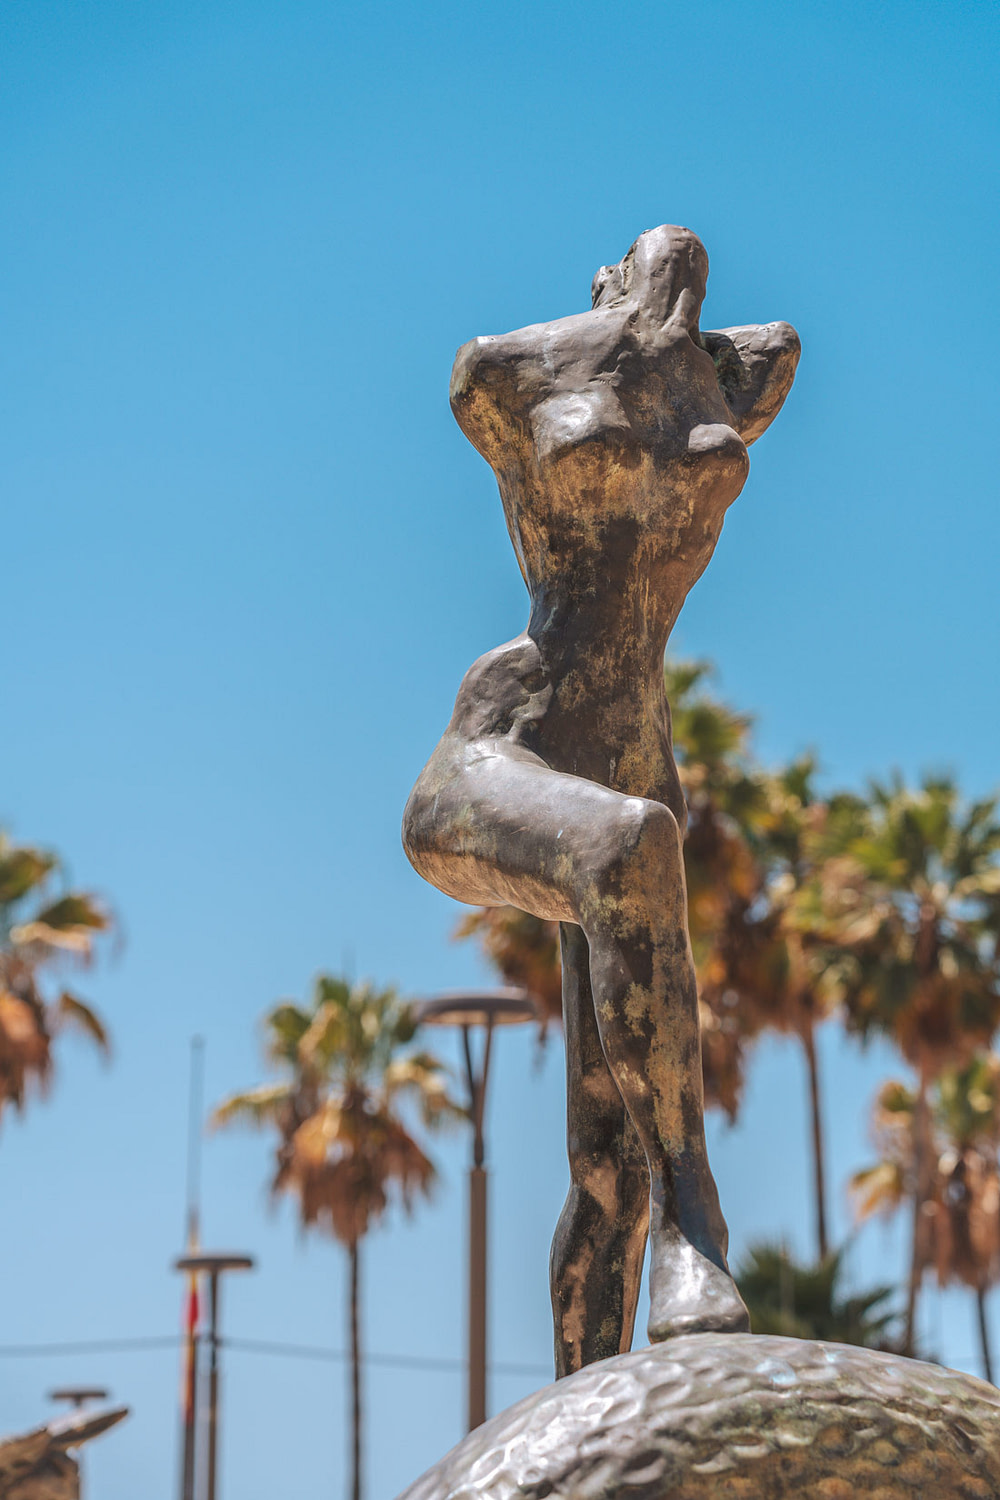 Dali’s sculptures in Marbella